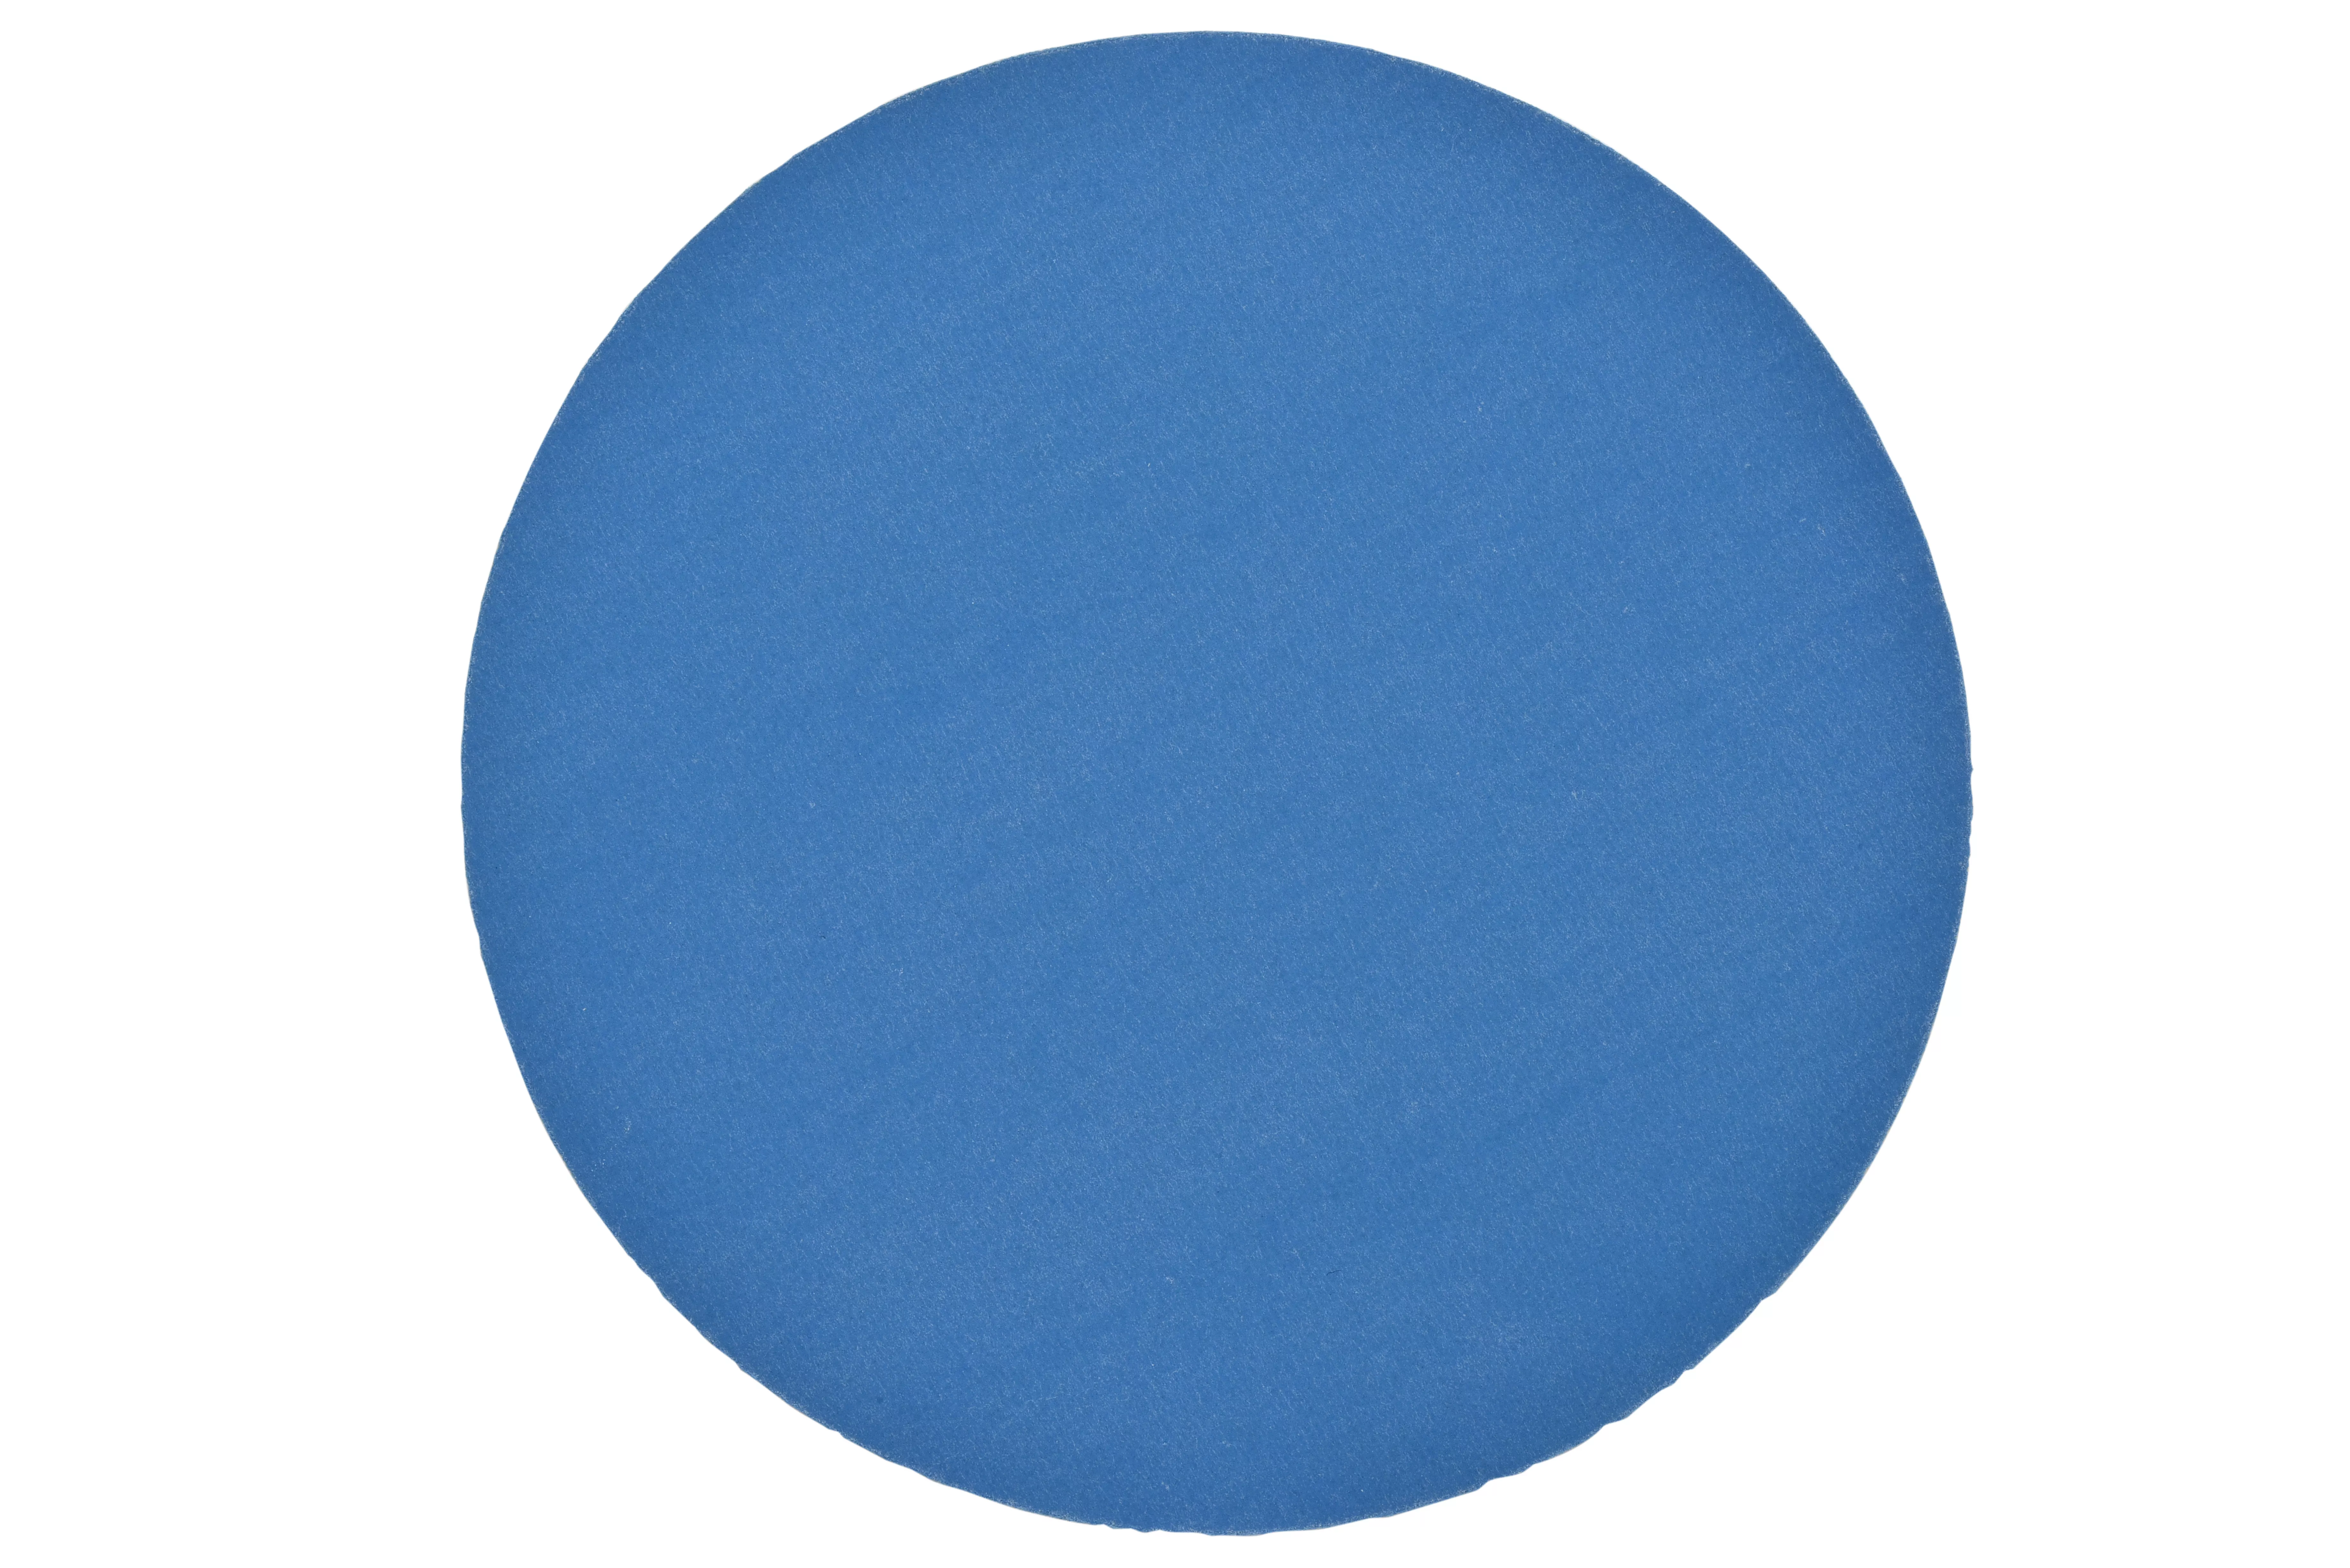 3M™ Hookit™ Blue Abrasive Disc, 36262, 5 in, 600 grade, No Hole, 50 discs per carton, 4 cartons per case